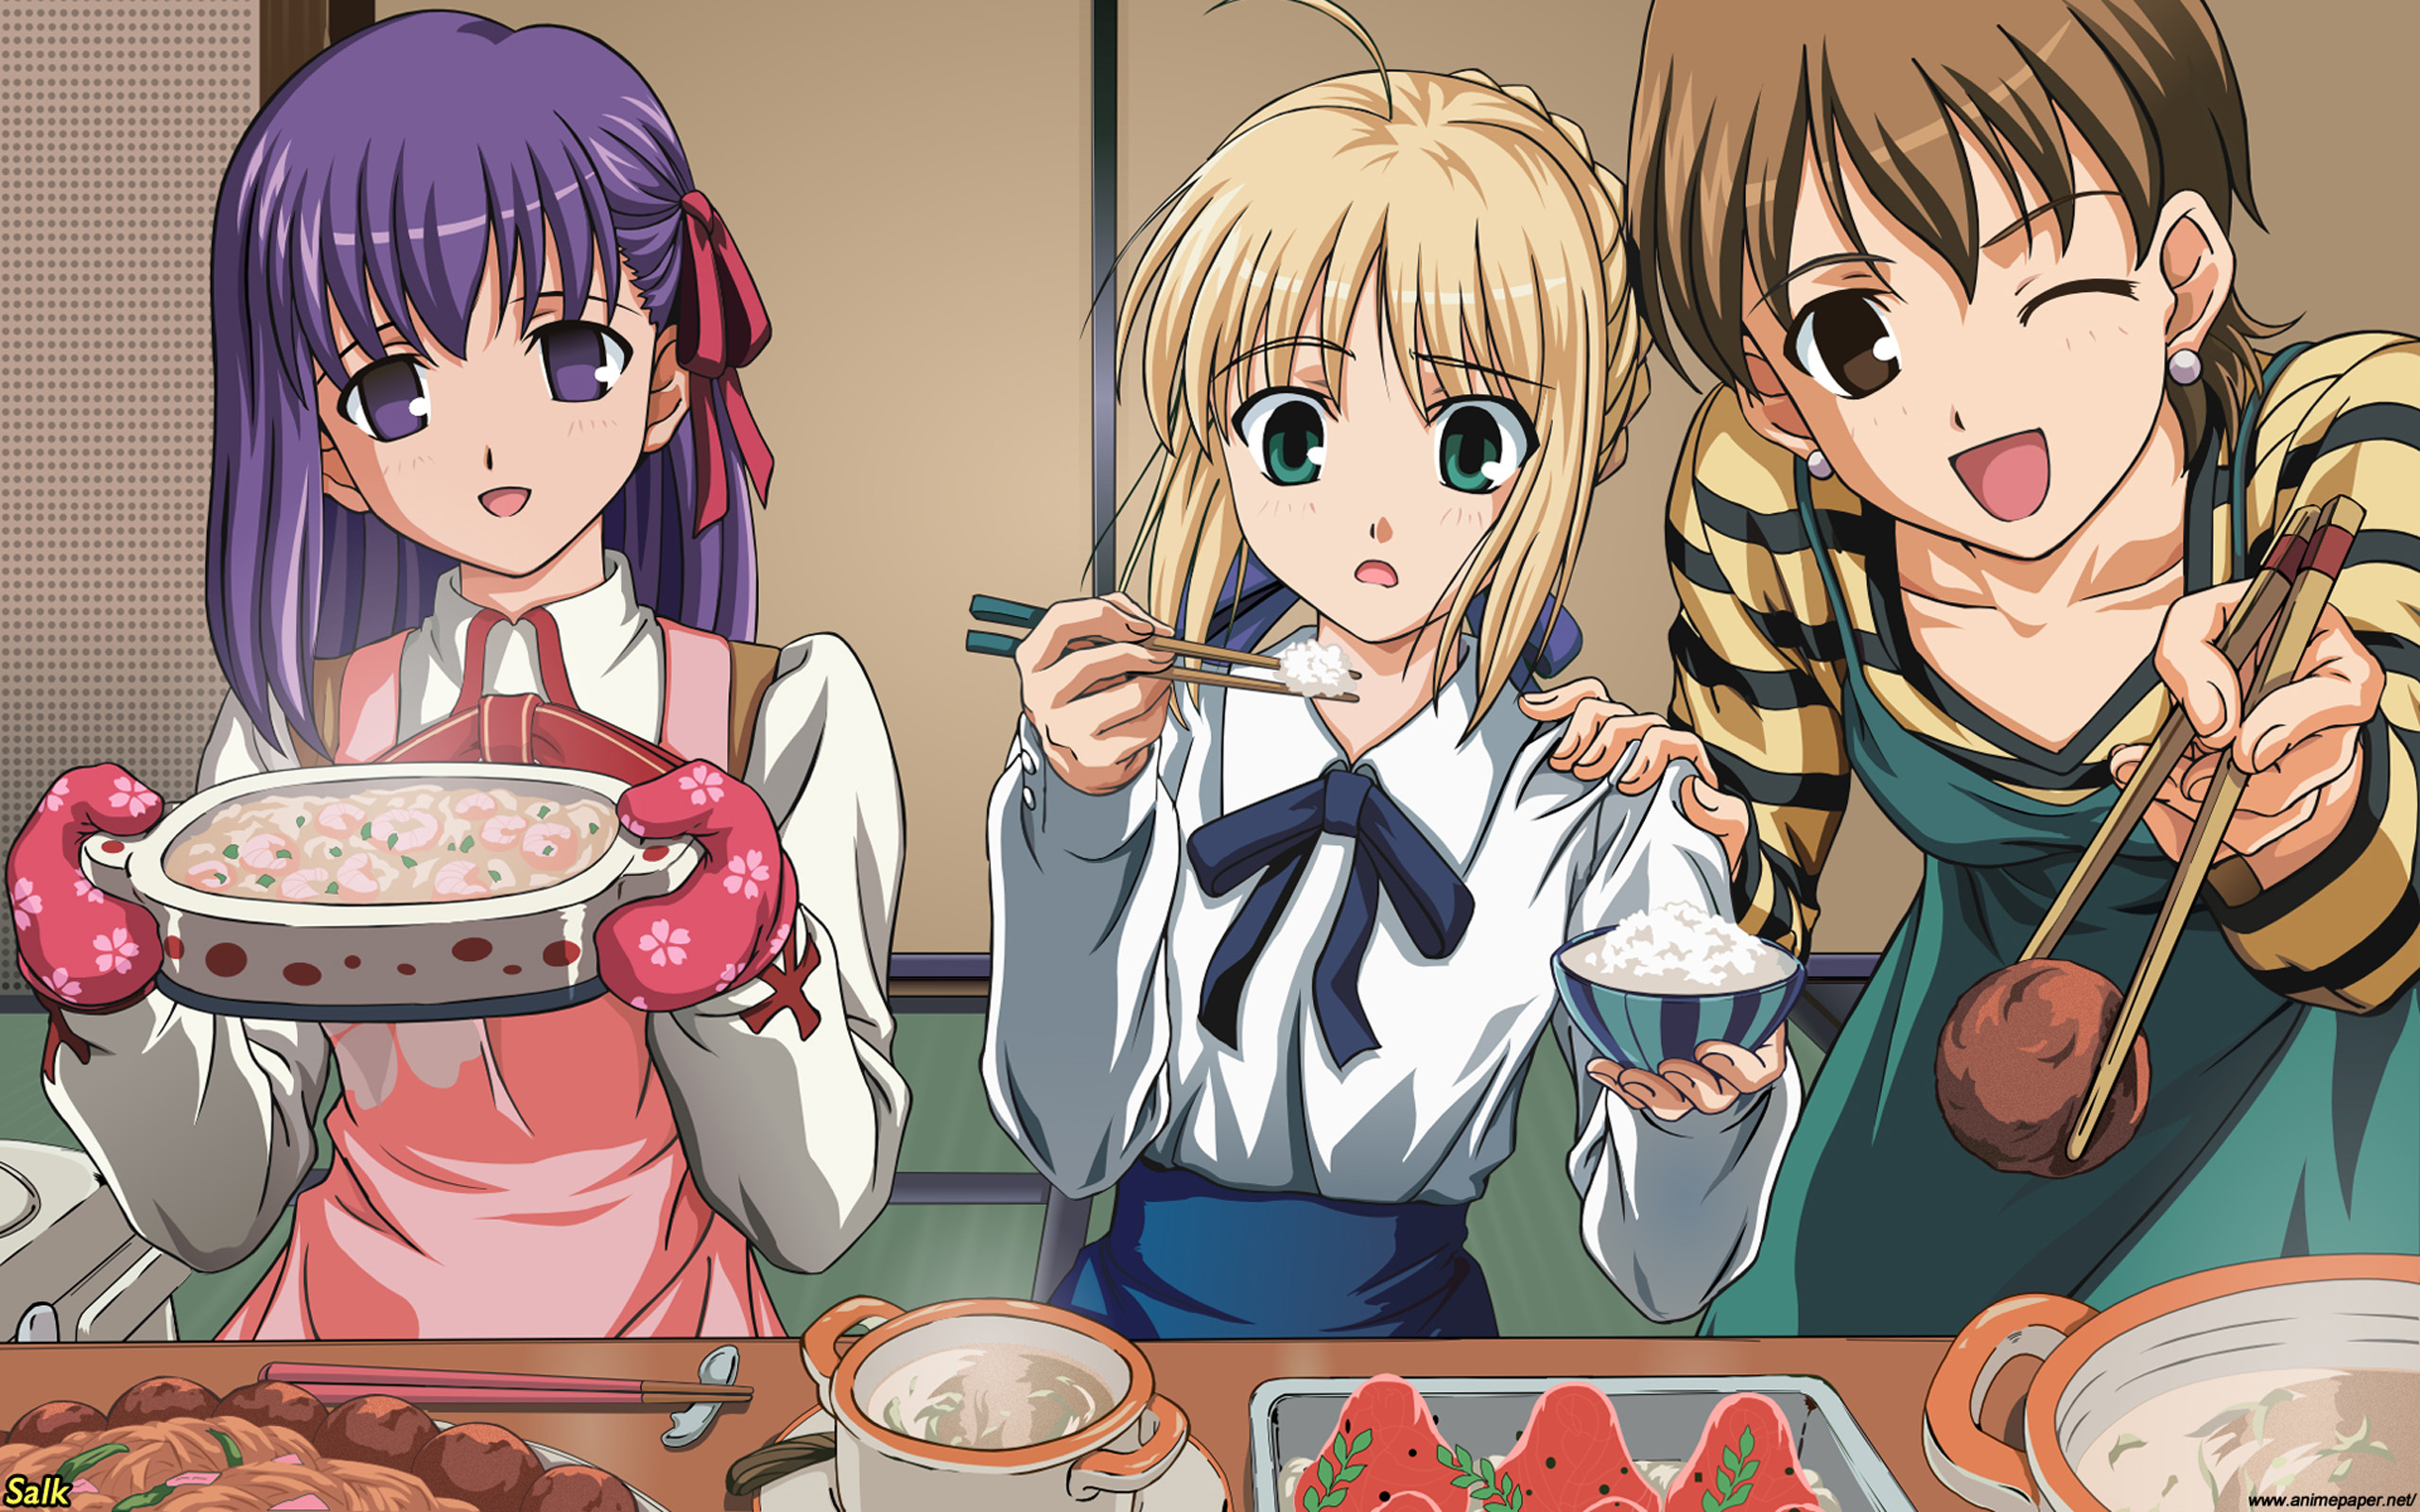 Fate/Stay Night (Судьба), Сабля, Мато Сакура, Fujimura Yuzuki, Fujimura Тайга, Fate series (Судьба) - обои на рабочий стол